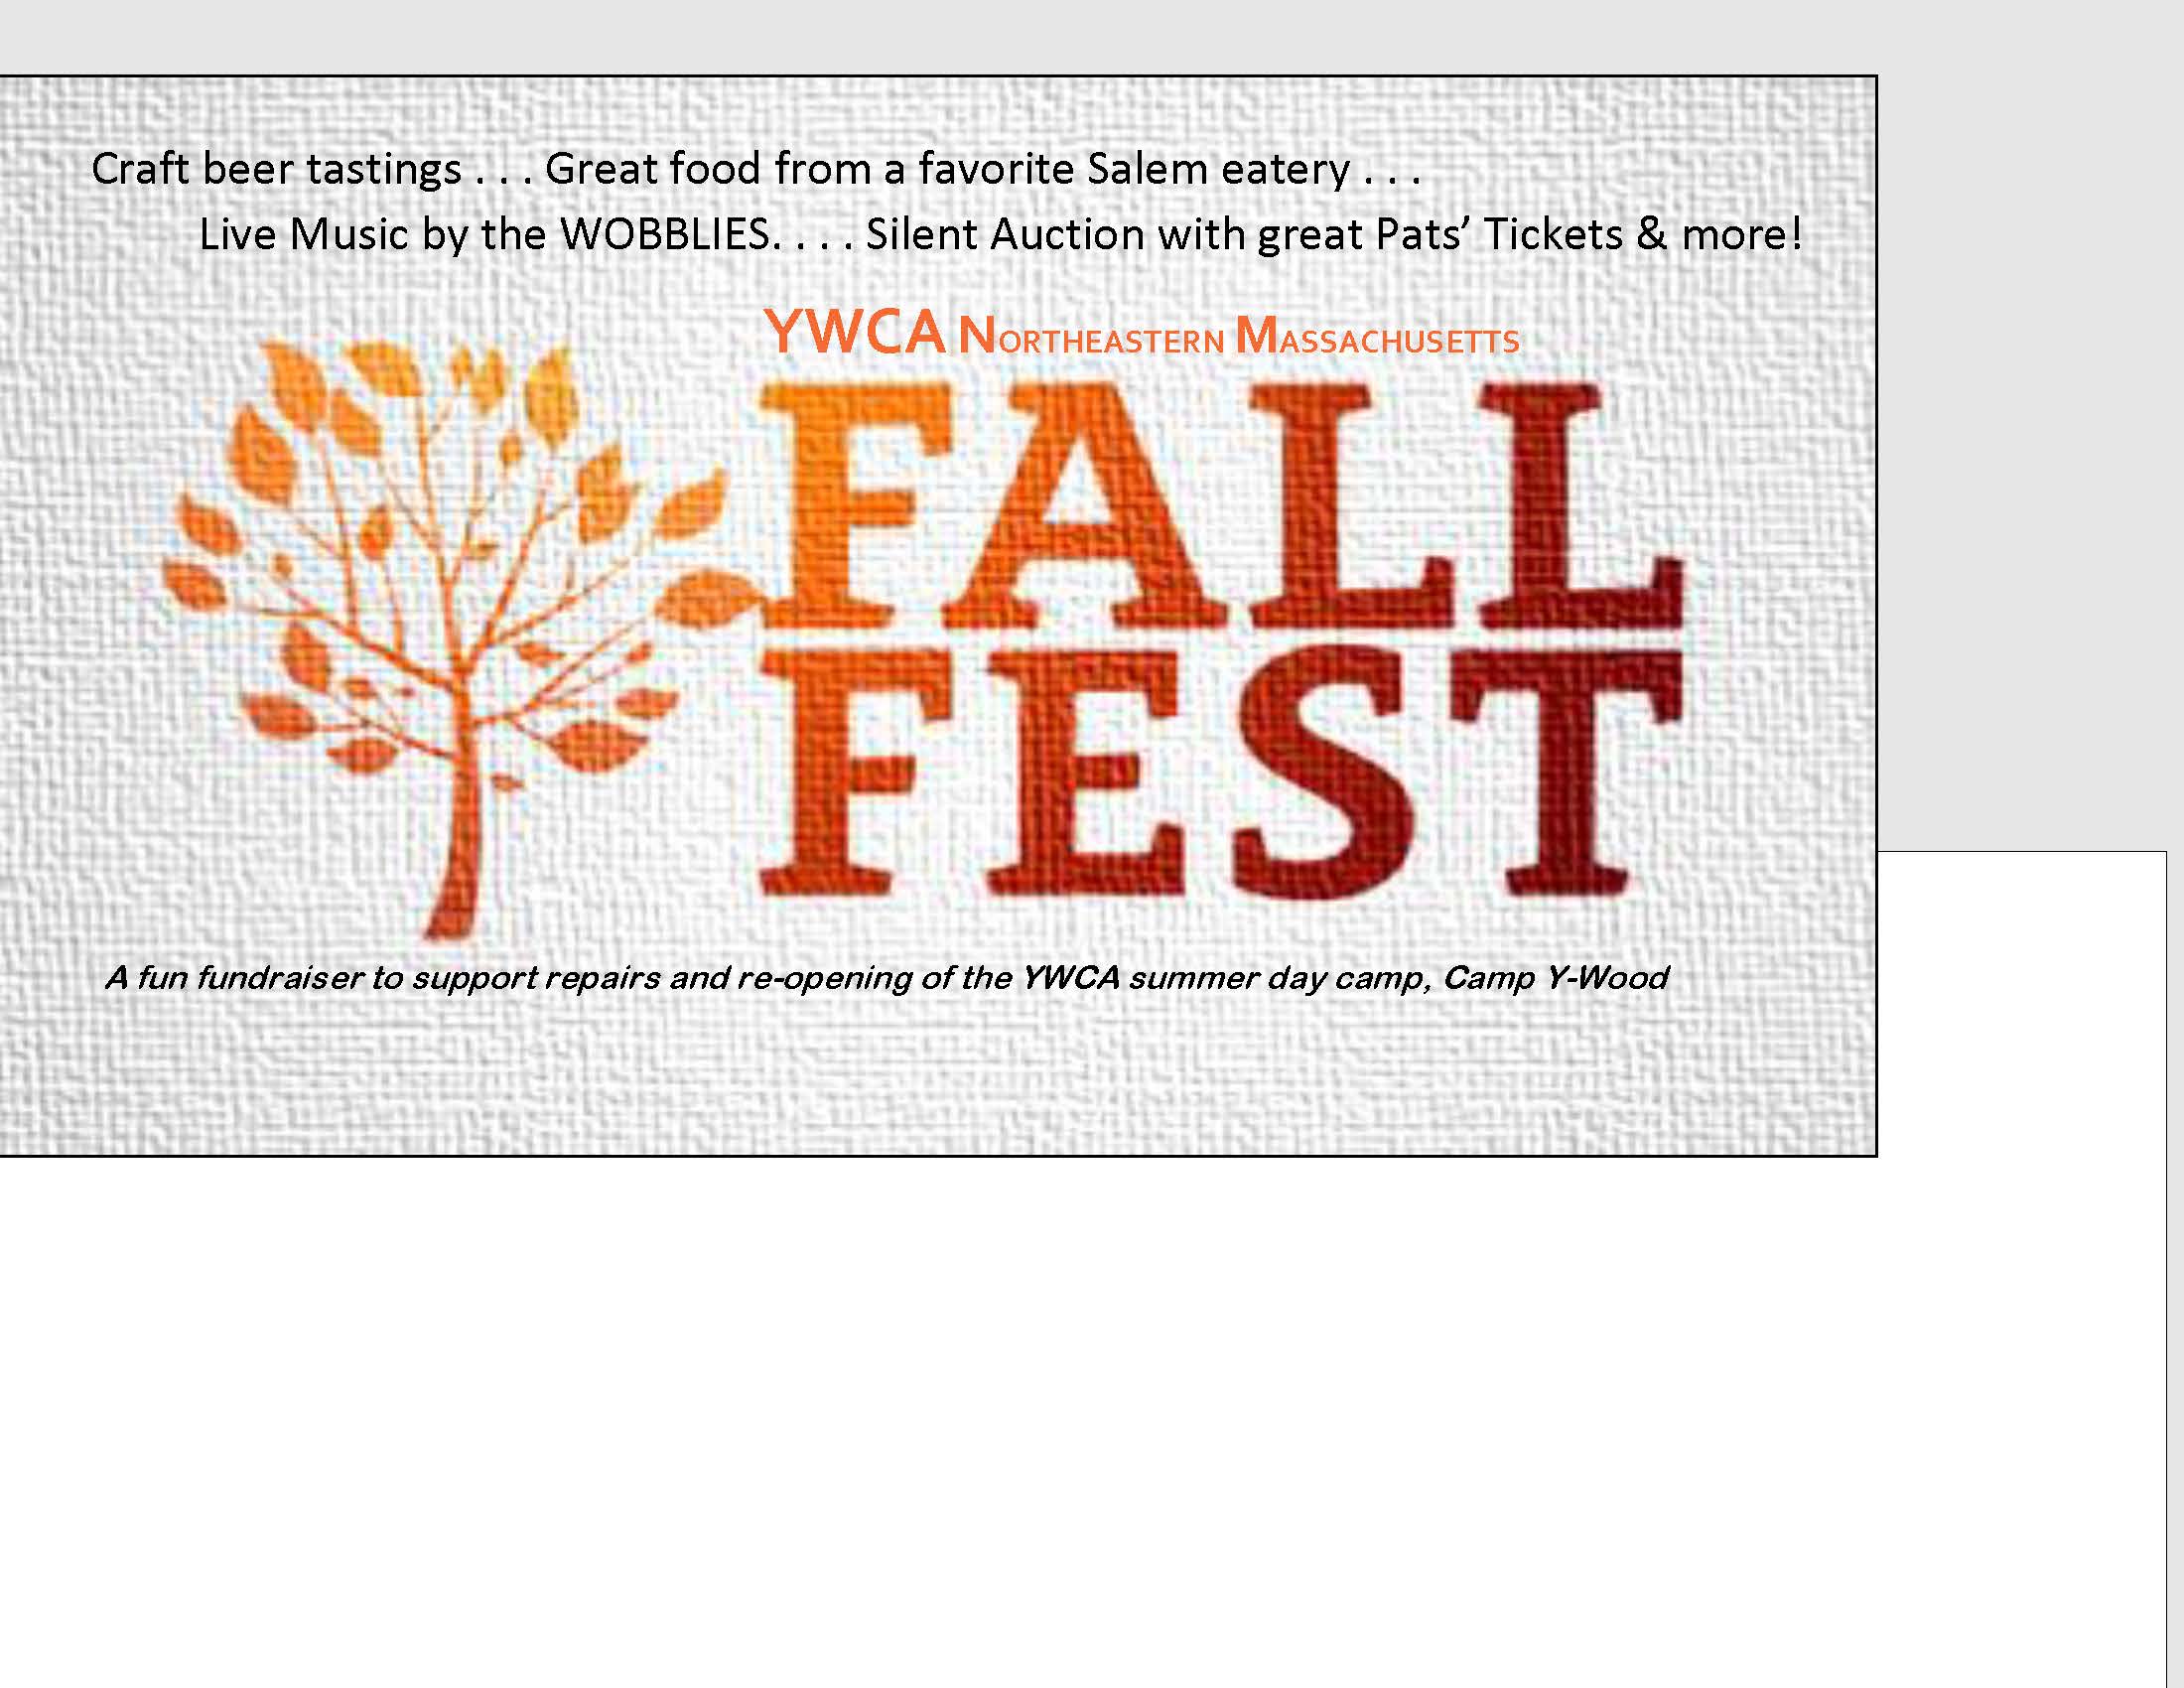 YWCA Northeastern Massachusetts FALL FEST